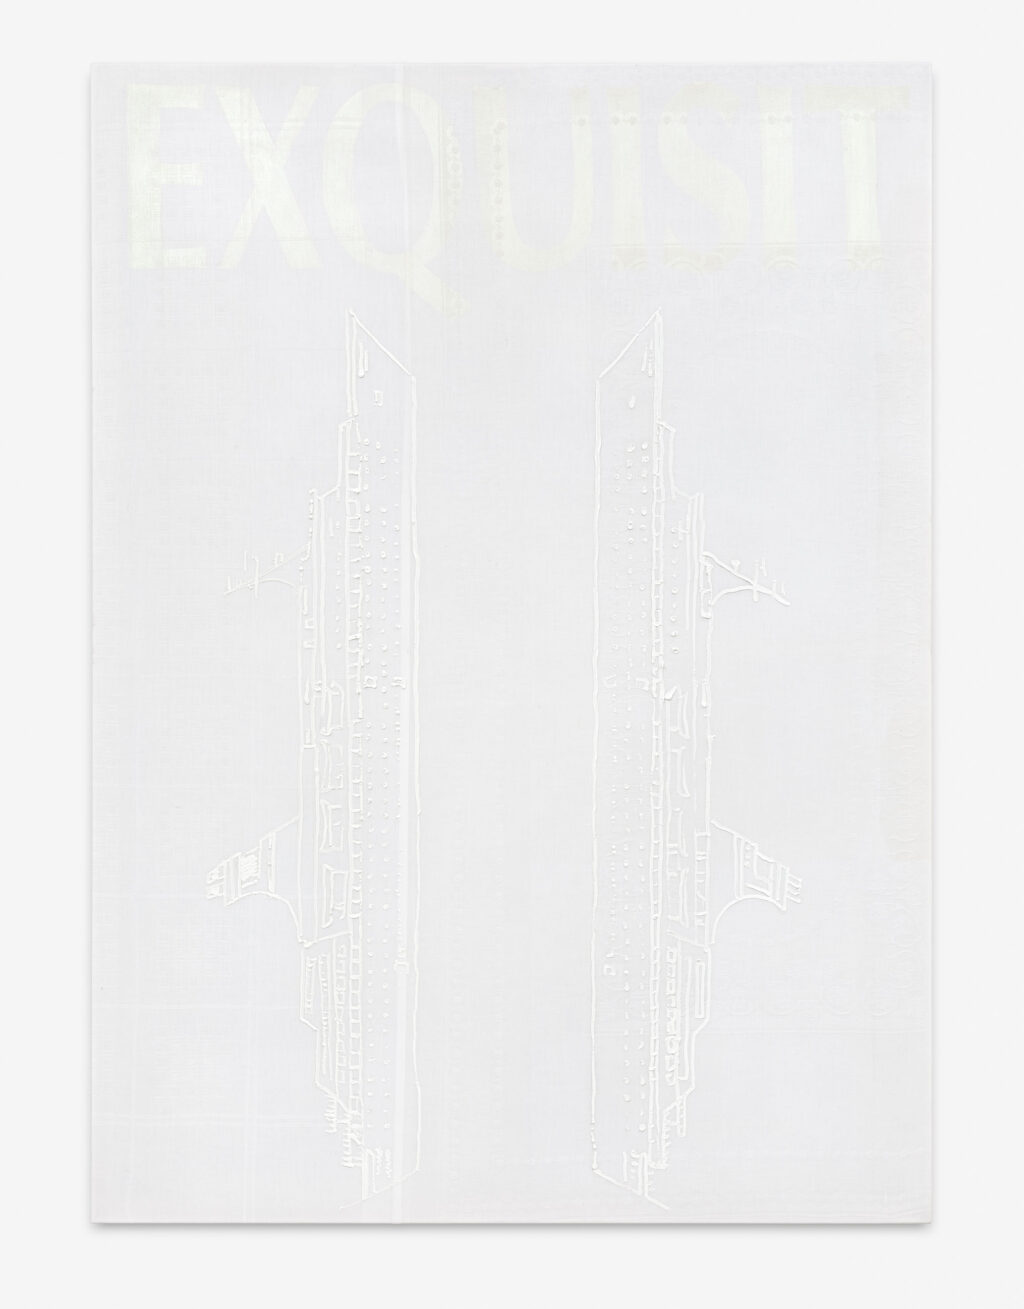 <p>NOAH KLINK</p>
<p> </p>
<div>
<p class="Text">Josefine Reisch, 2023, Exquisit. Courtesy of the artist. © Galerie Noah Klink & Josefine Reisch</p>
</div>
